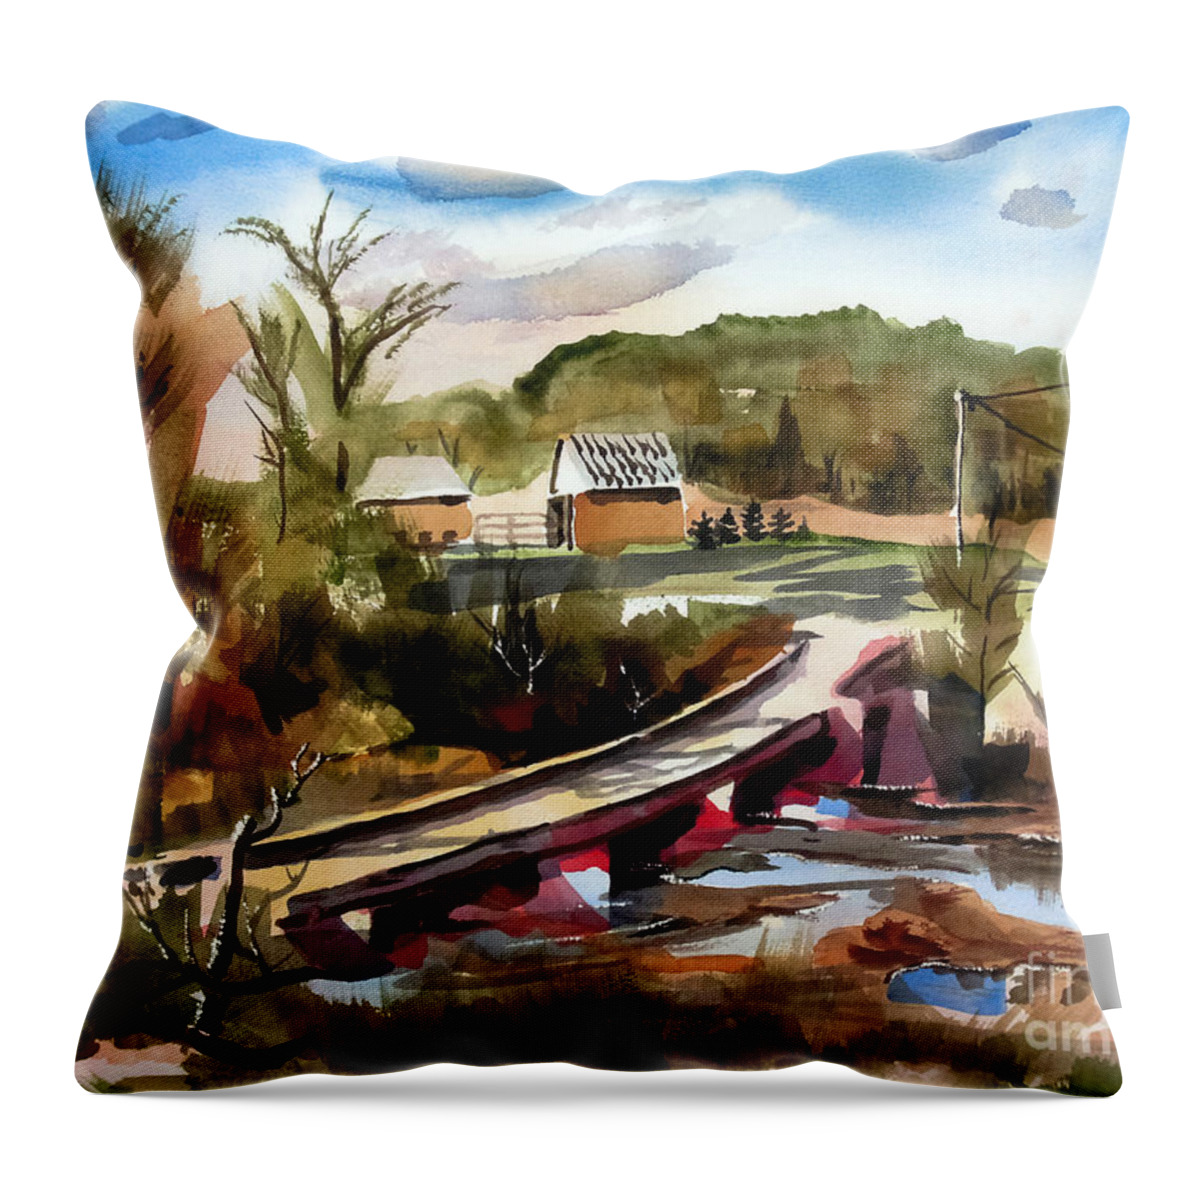 Low Water Bridge Ii Throw Pillow featuring the painting Low Water Bridge II by Kip DeVore